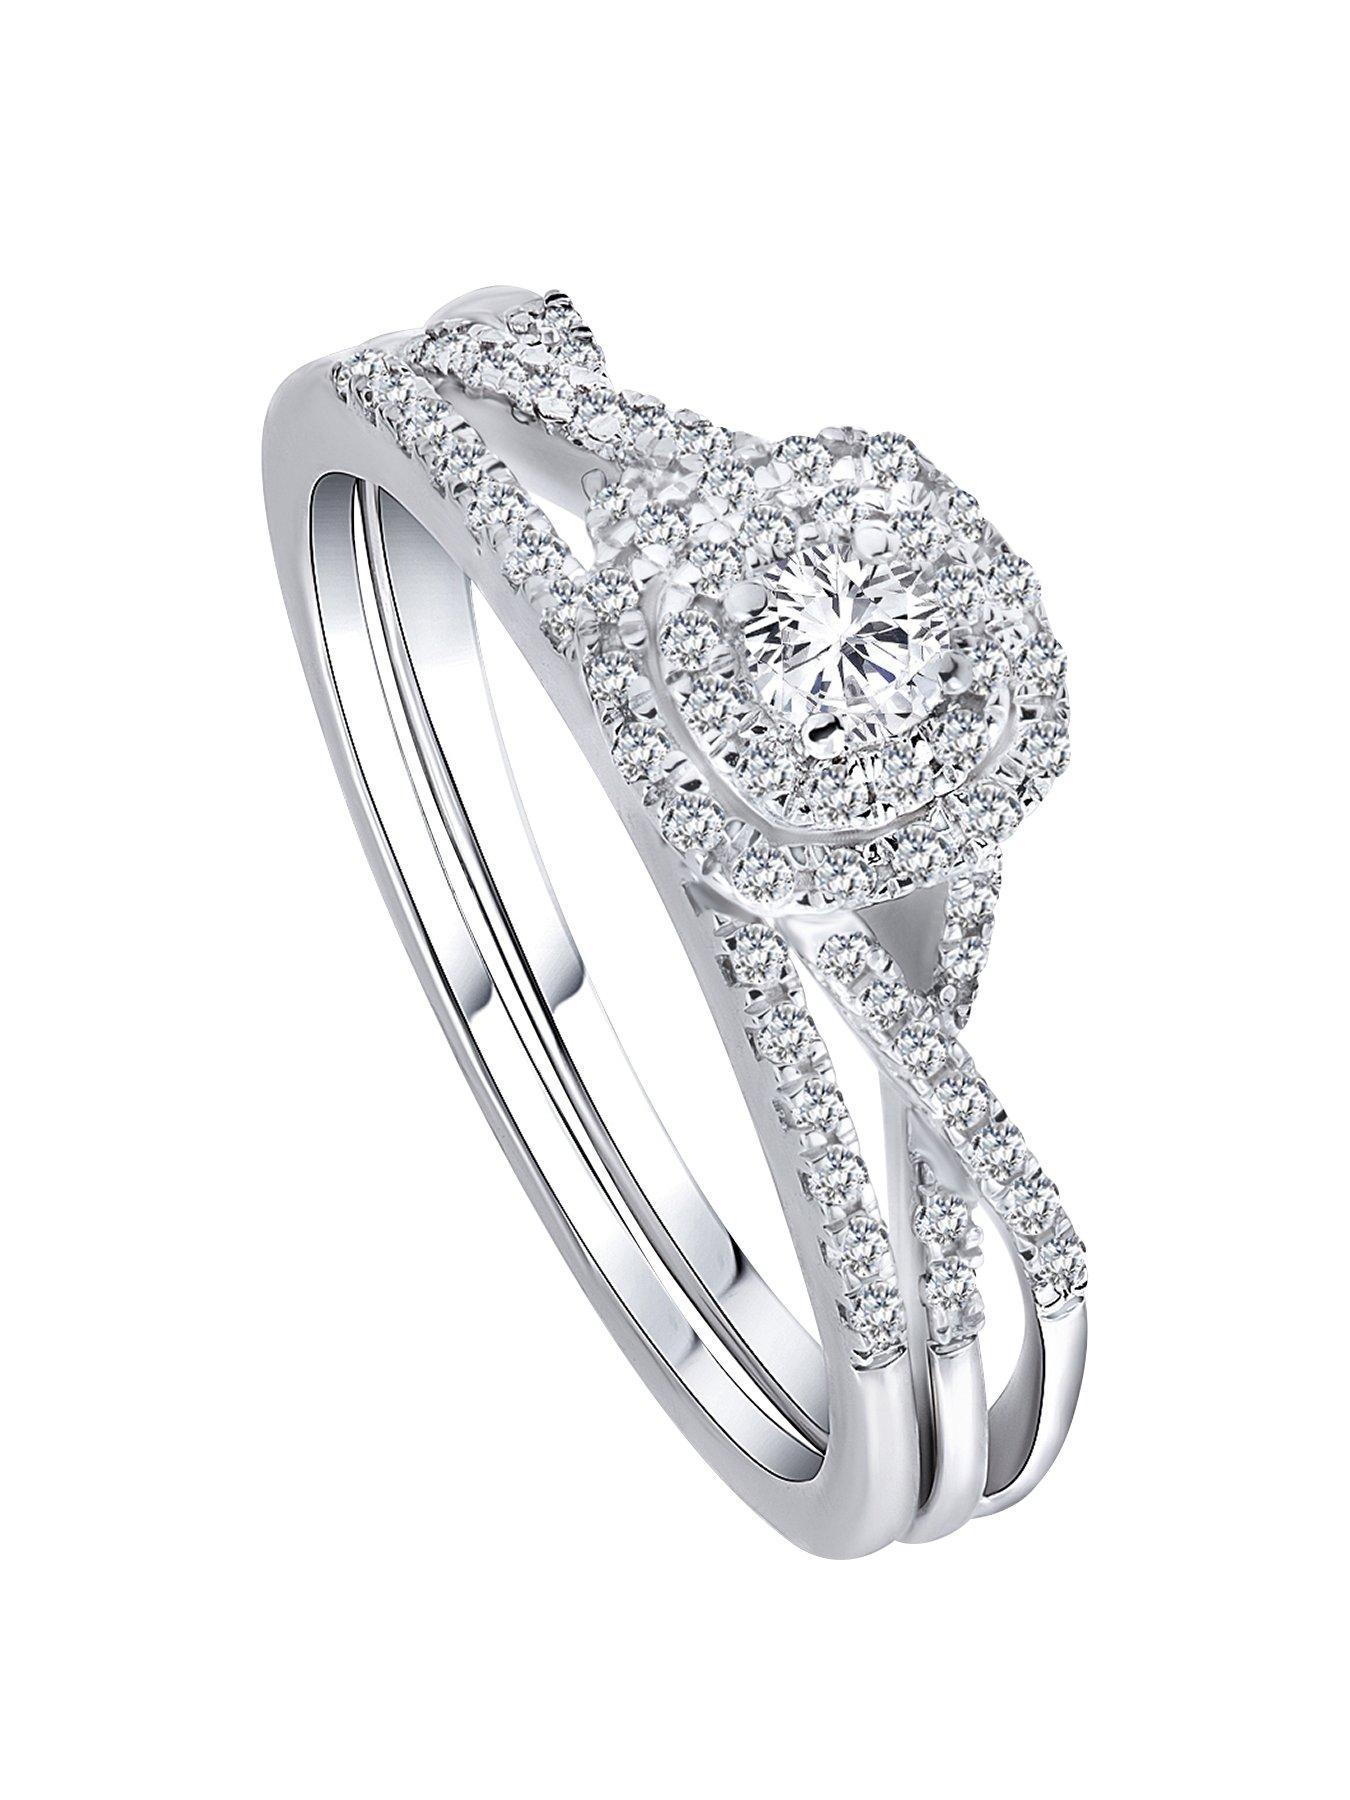 Diamond | Rings | Gifts & jewellery | www.littlewoods.com